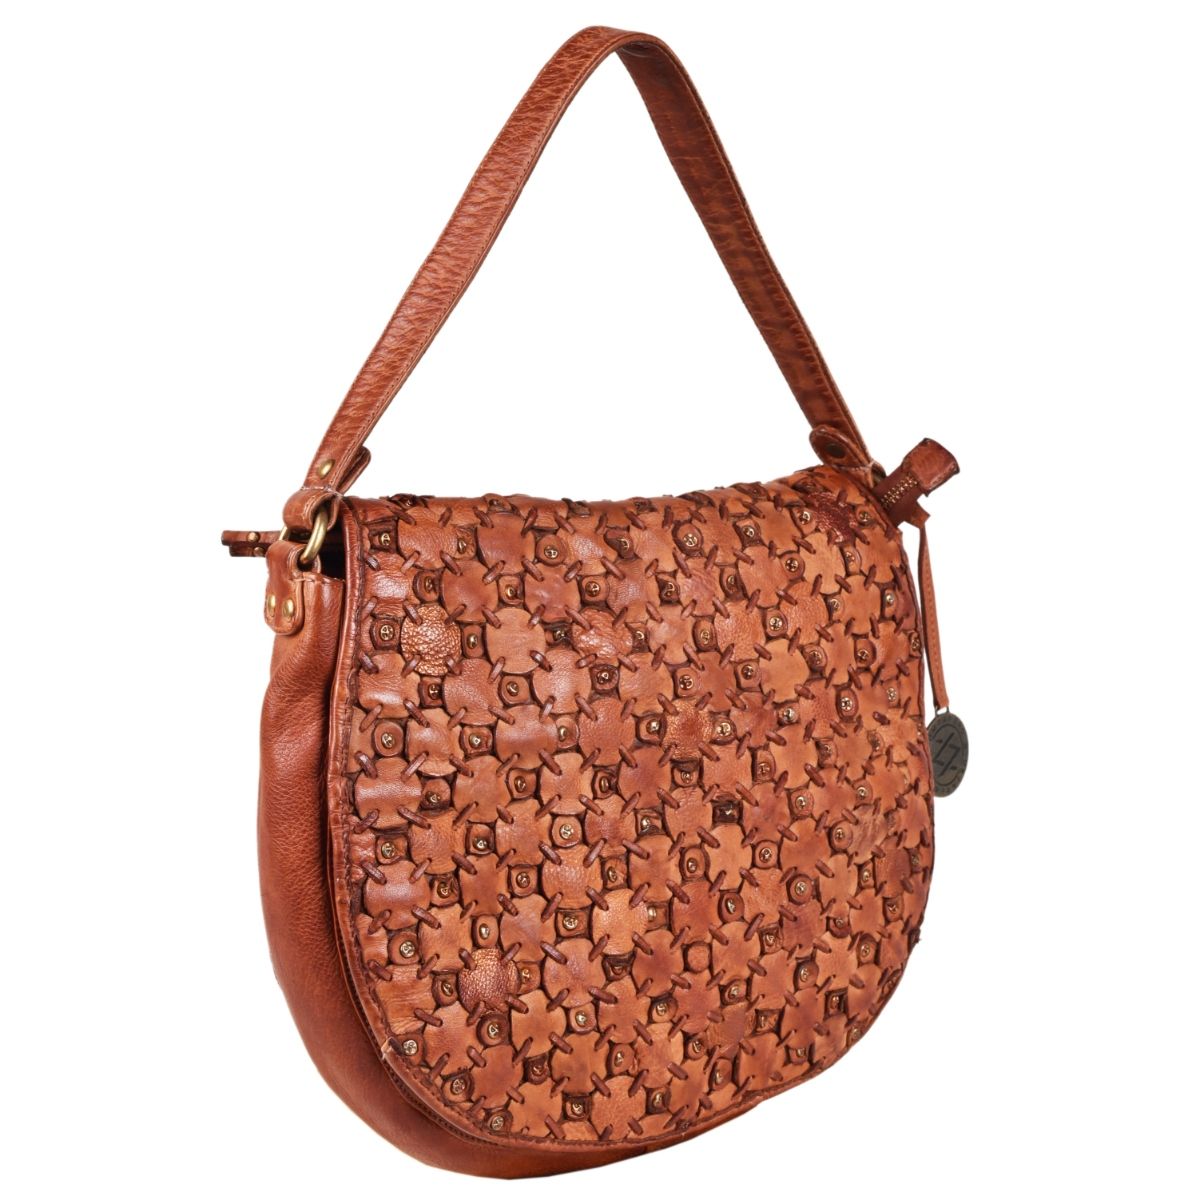 Buy Kompanero Brown Color Womens Leather Sling Bag at Amazonin